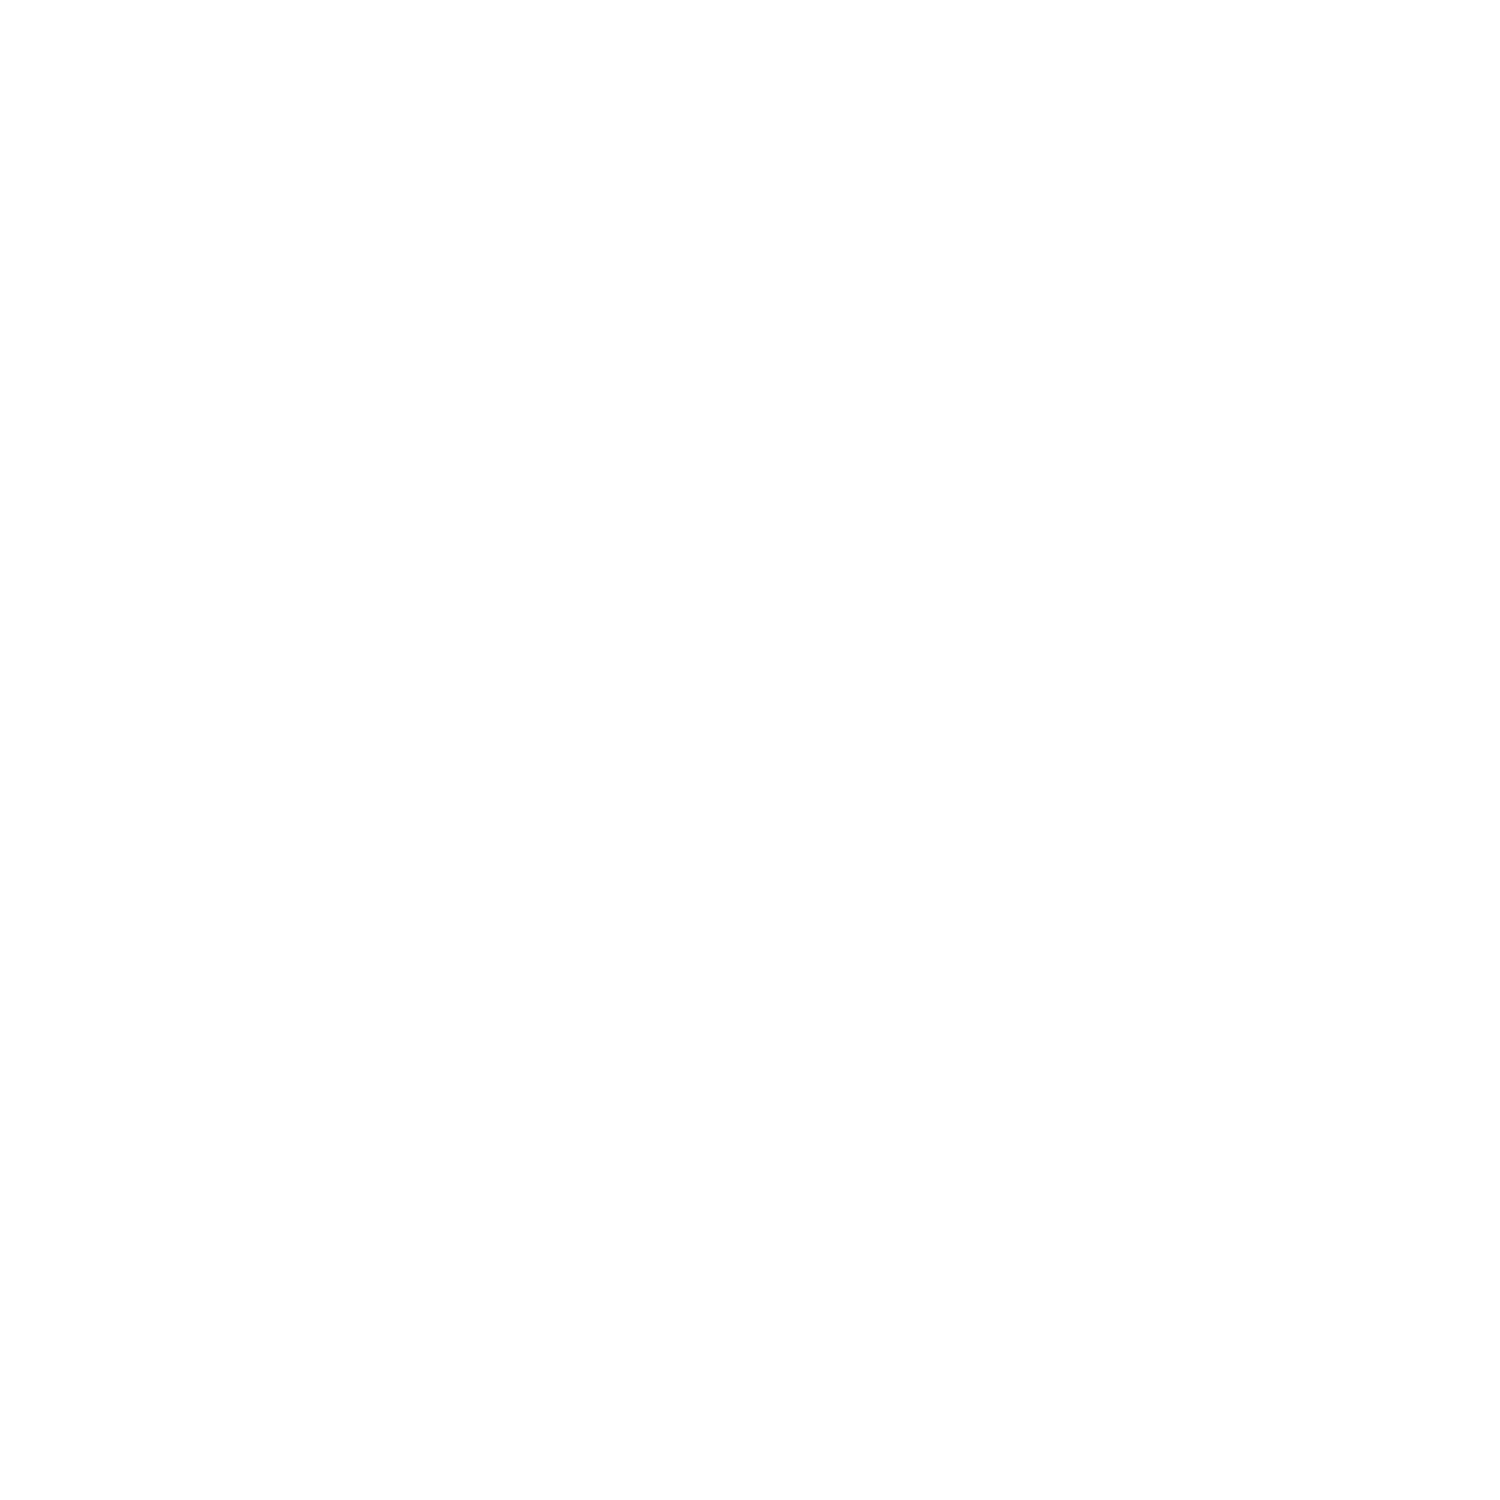 Charleston Prays Together